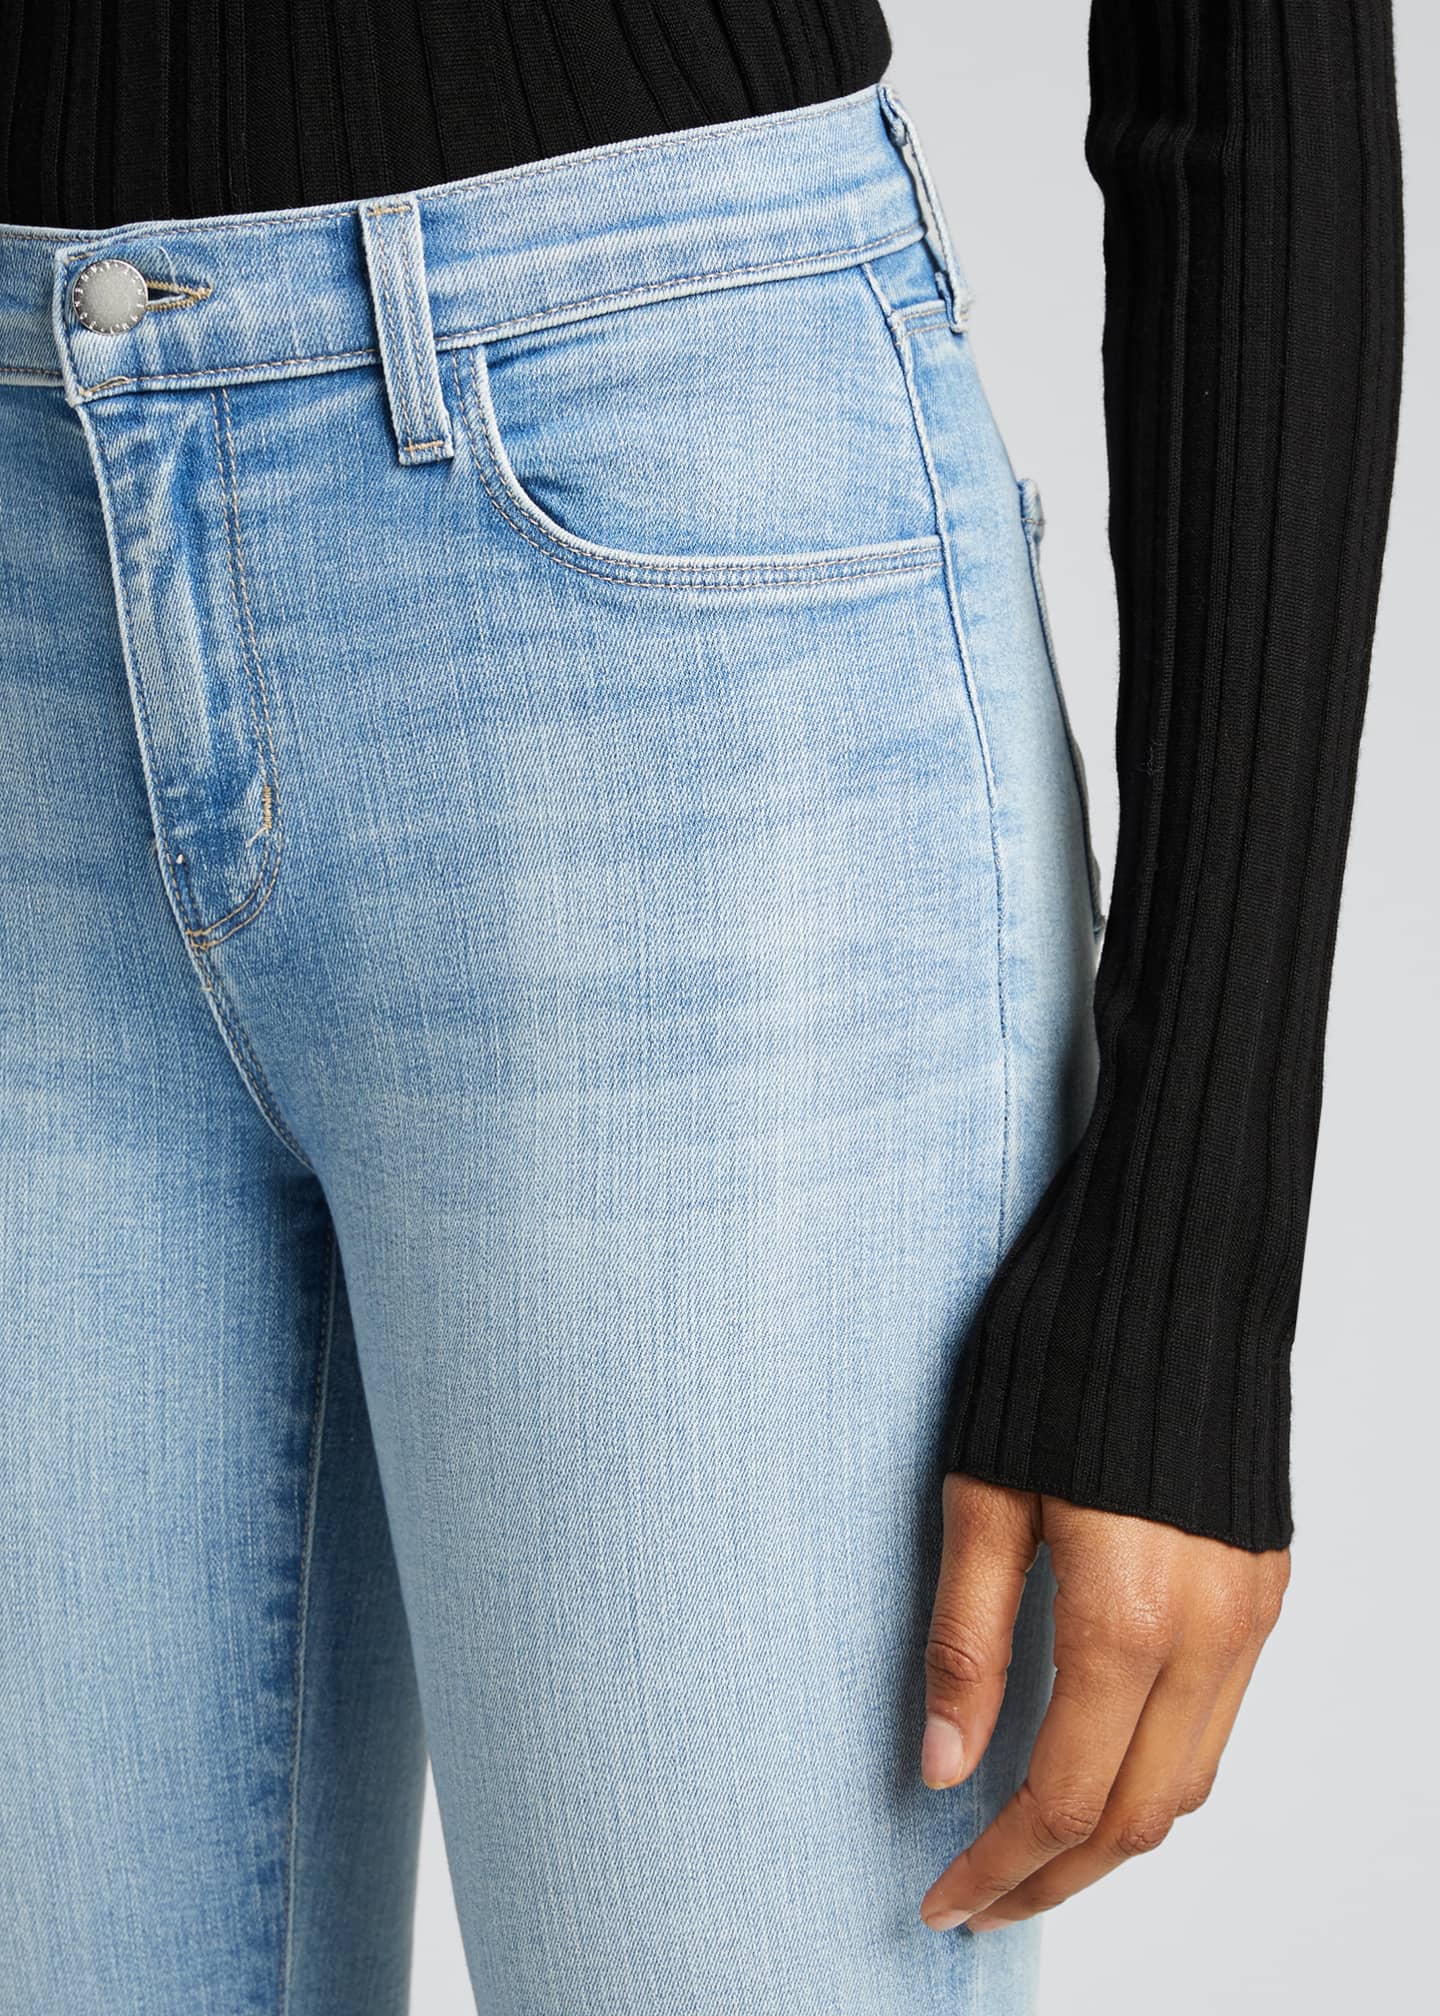 L'Agence Sada Cropped Straight-Leg Jeans - Bergdorf Goodman